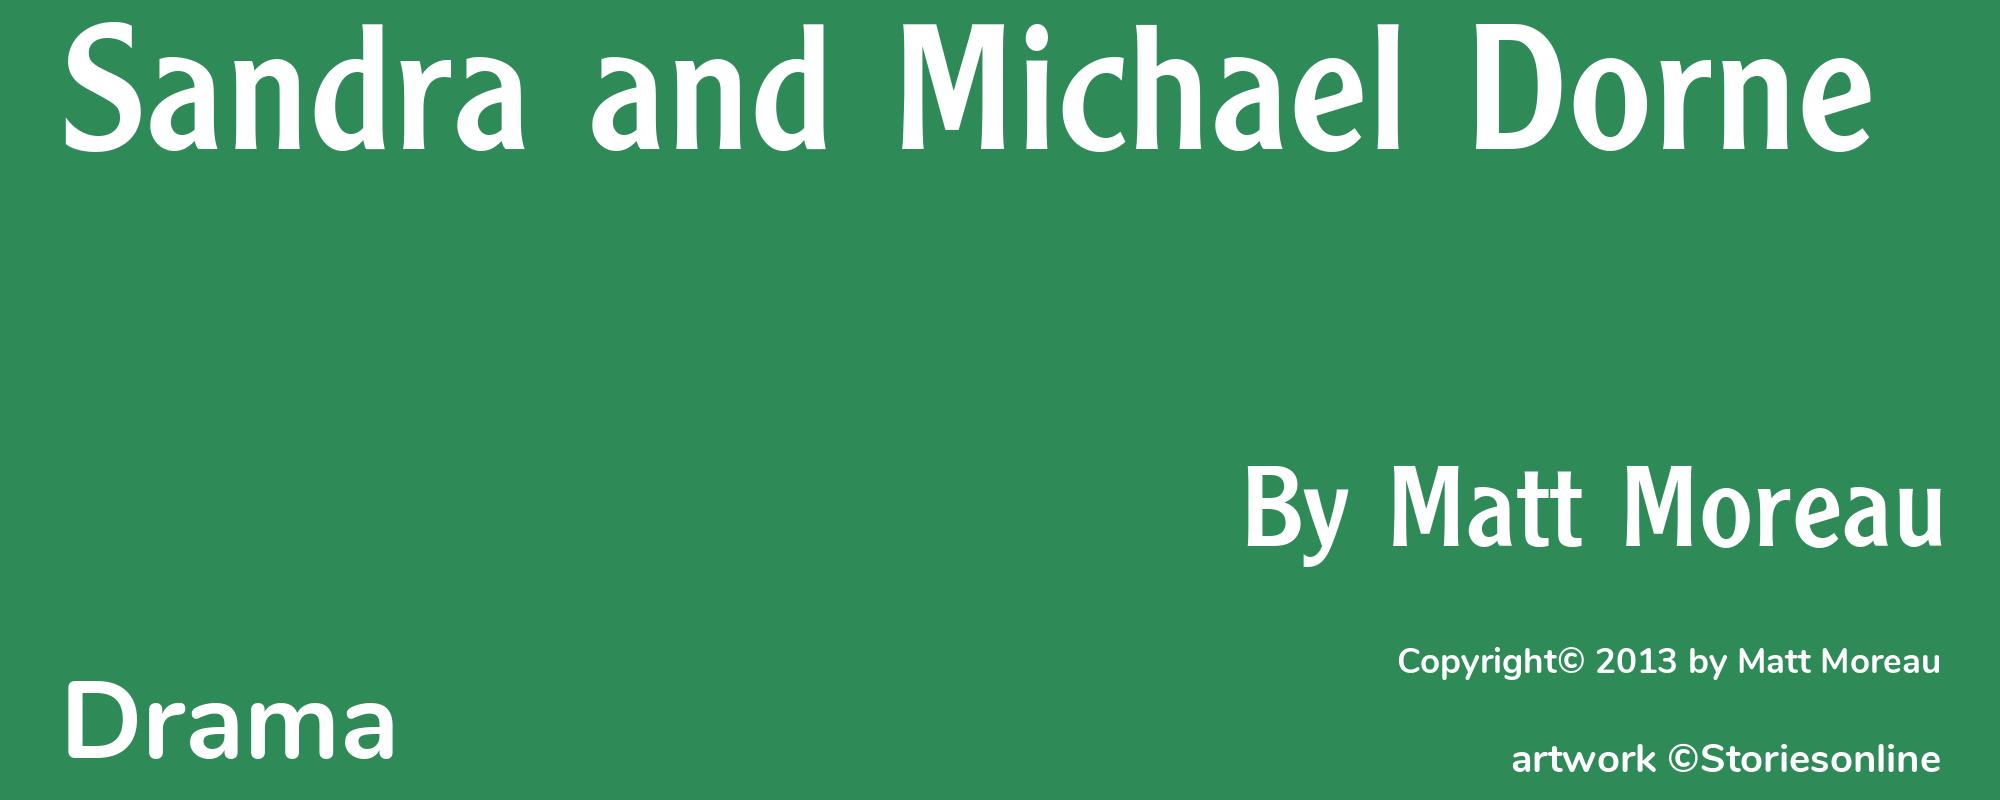 Sandra and Michael Dorne - Cover